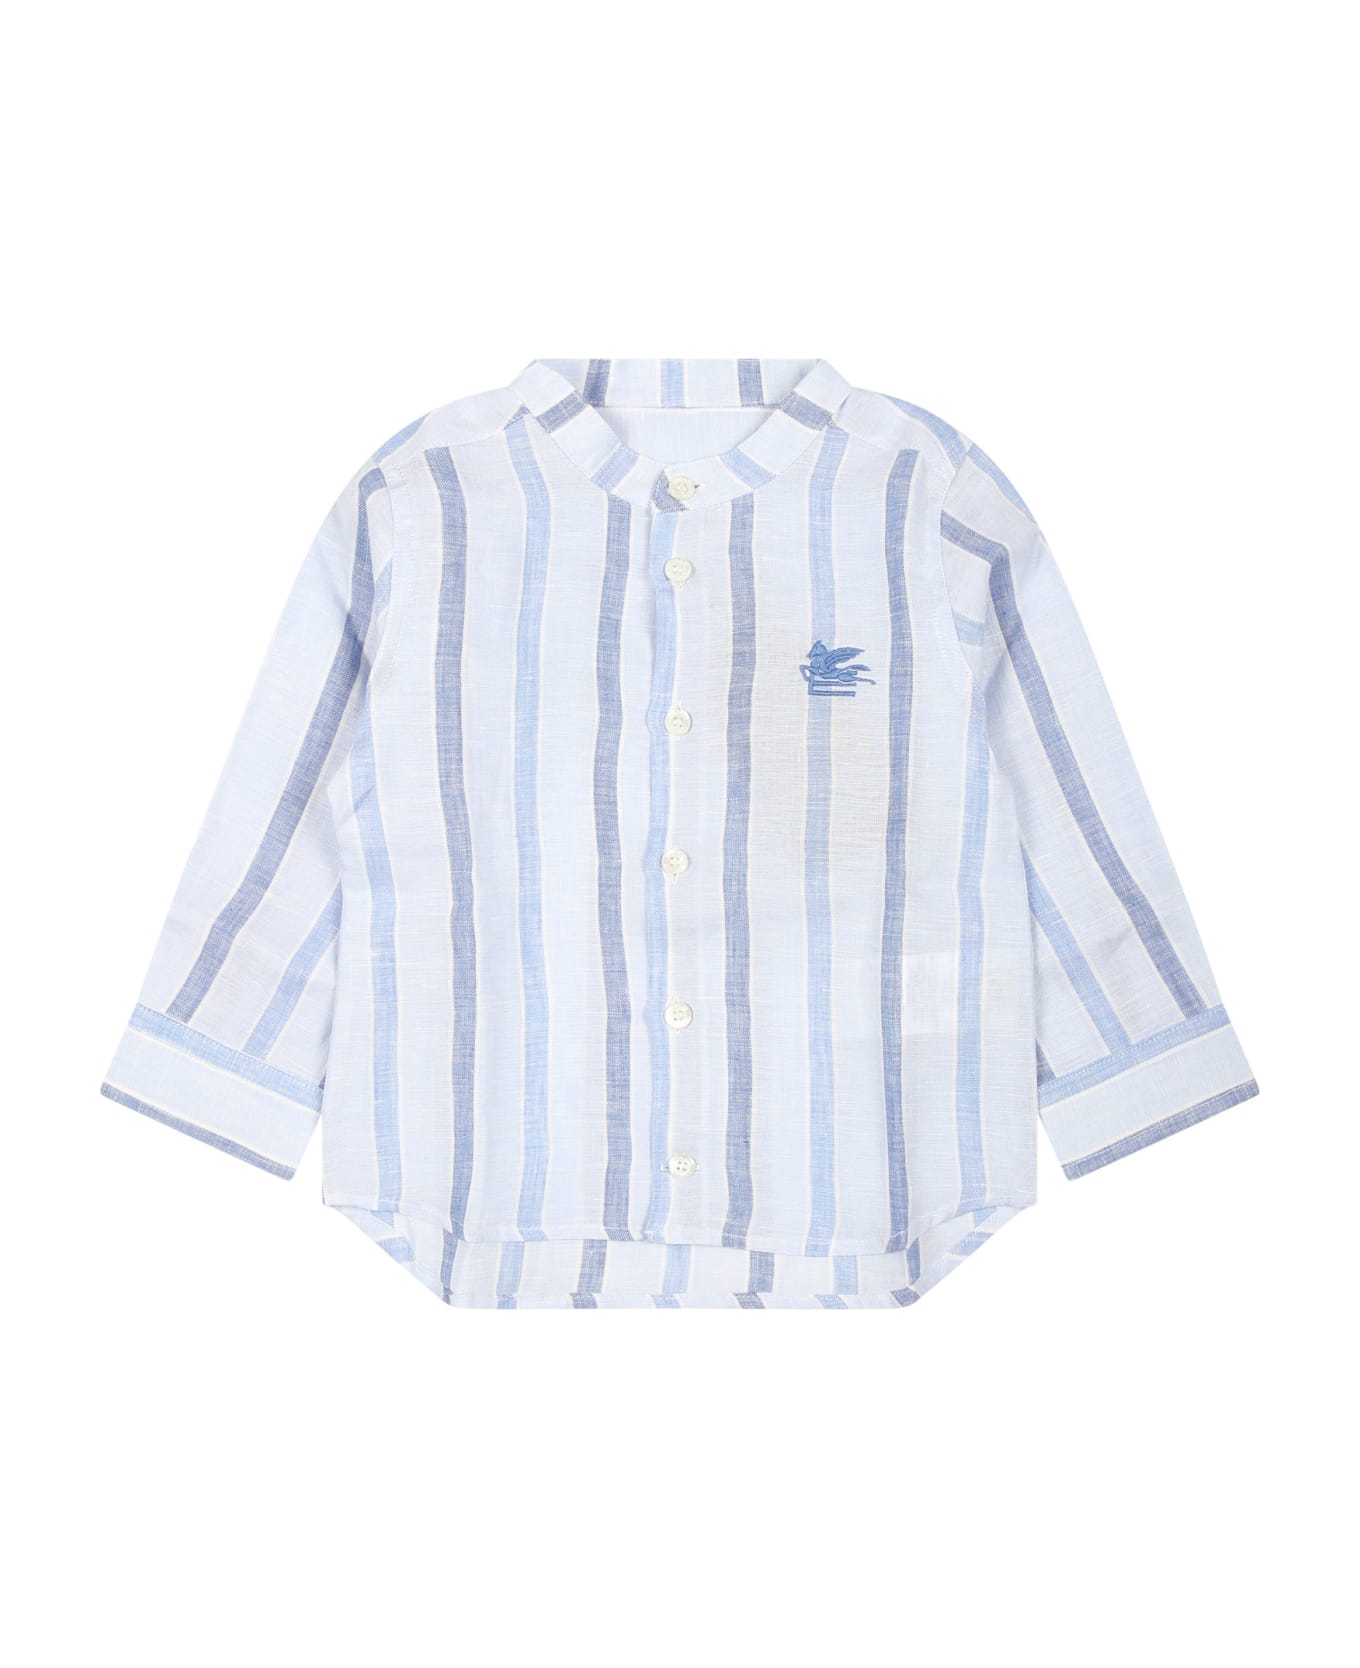 Etro Light Blue Shirt For Baby Boy With Logo - Light Blue シャツ